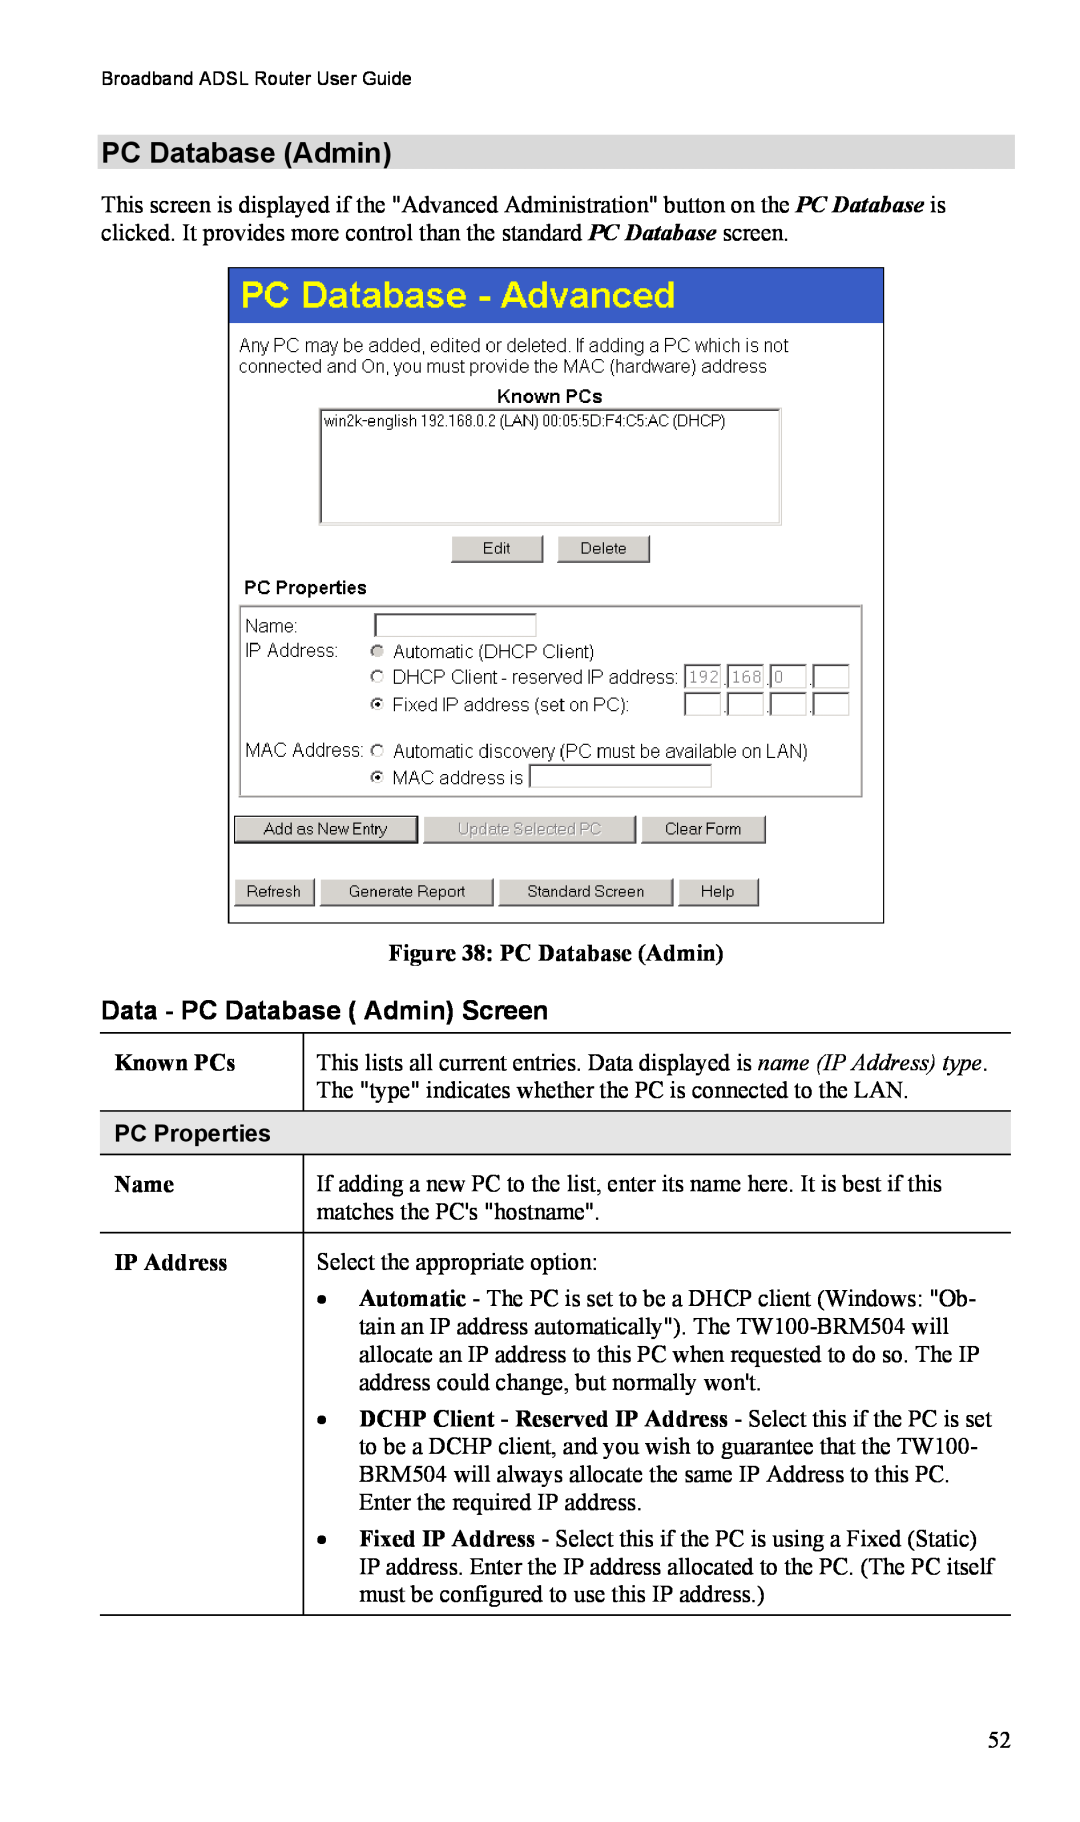 TRENDnet TW100-BRM504 manual Data - PC Database Admin Screen, PC Properties 